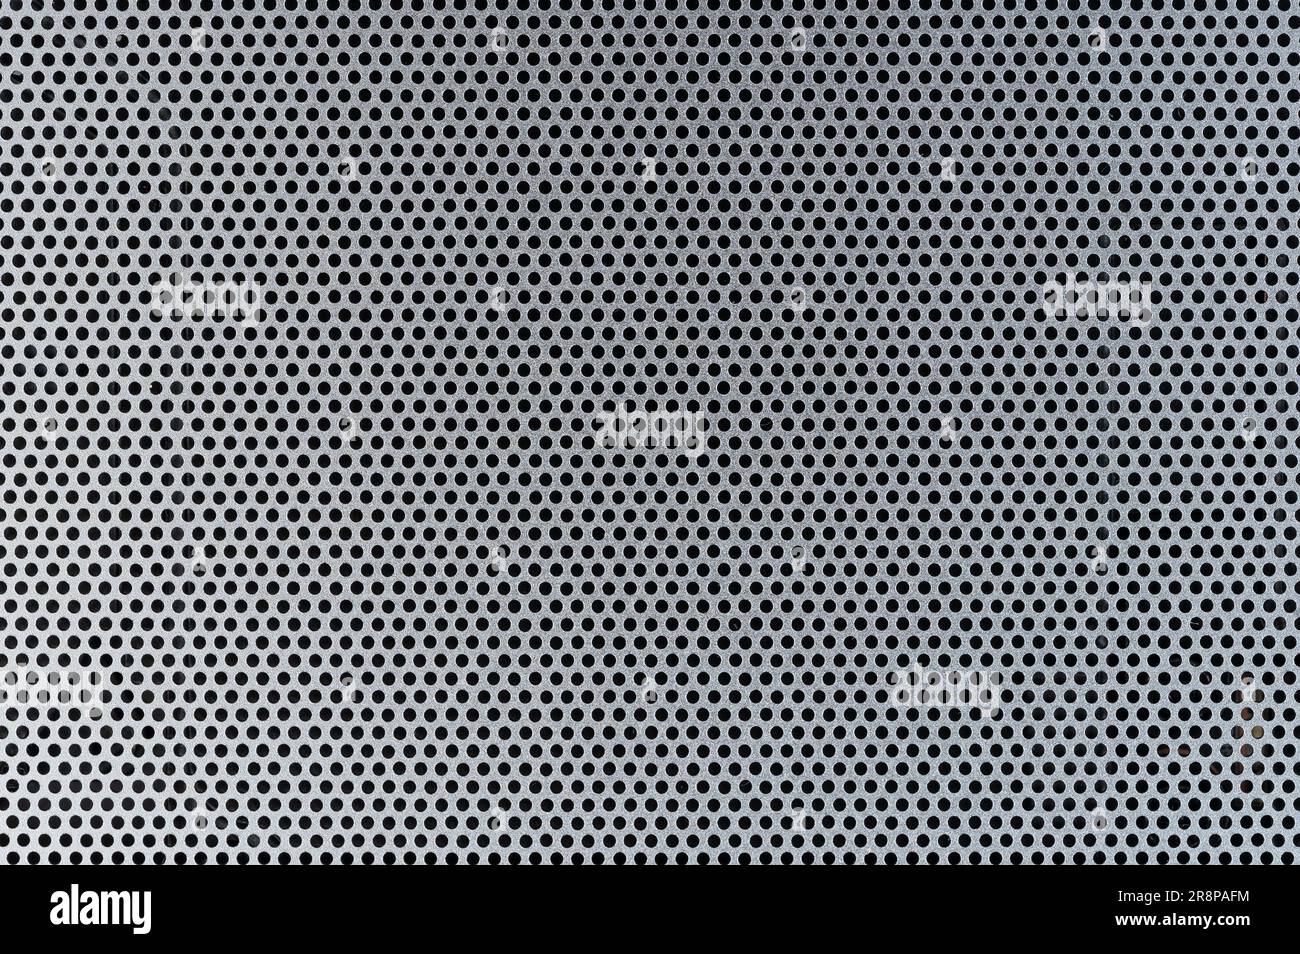 Metallgitterstruktur mit perforierten kreisförmigen Löchern – Nahaufnahme Stockfoto